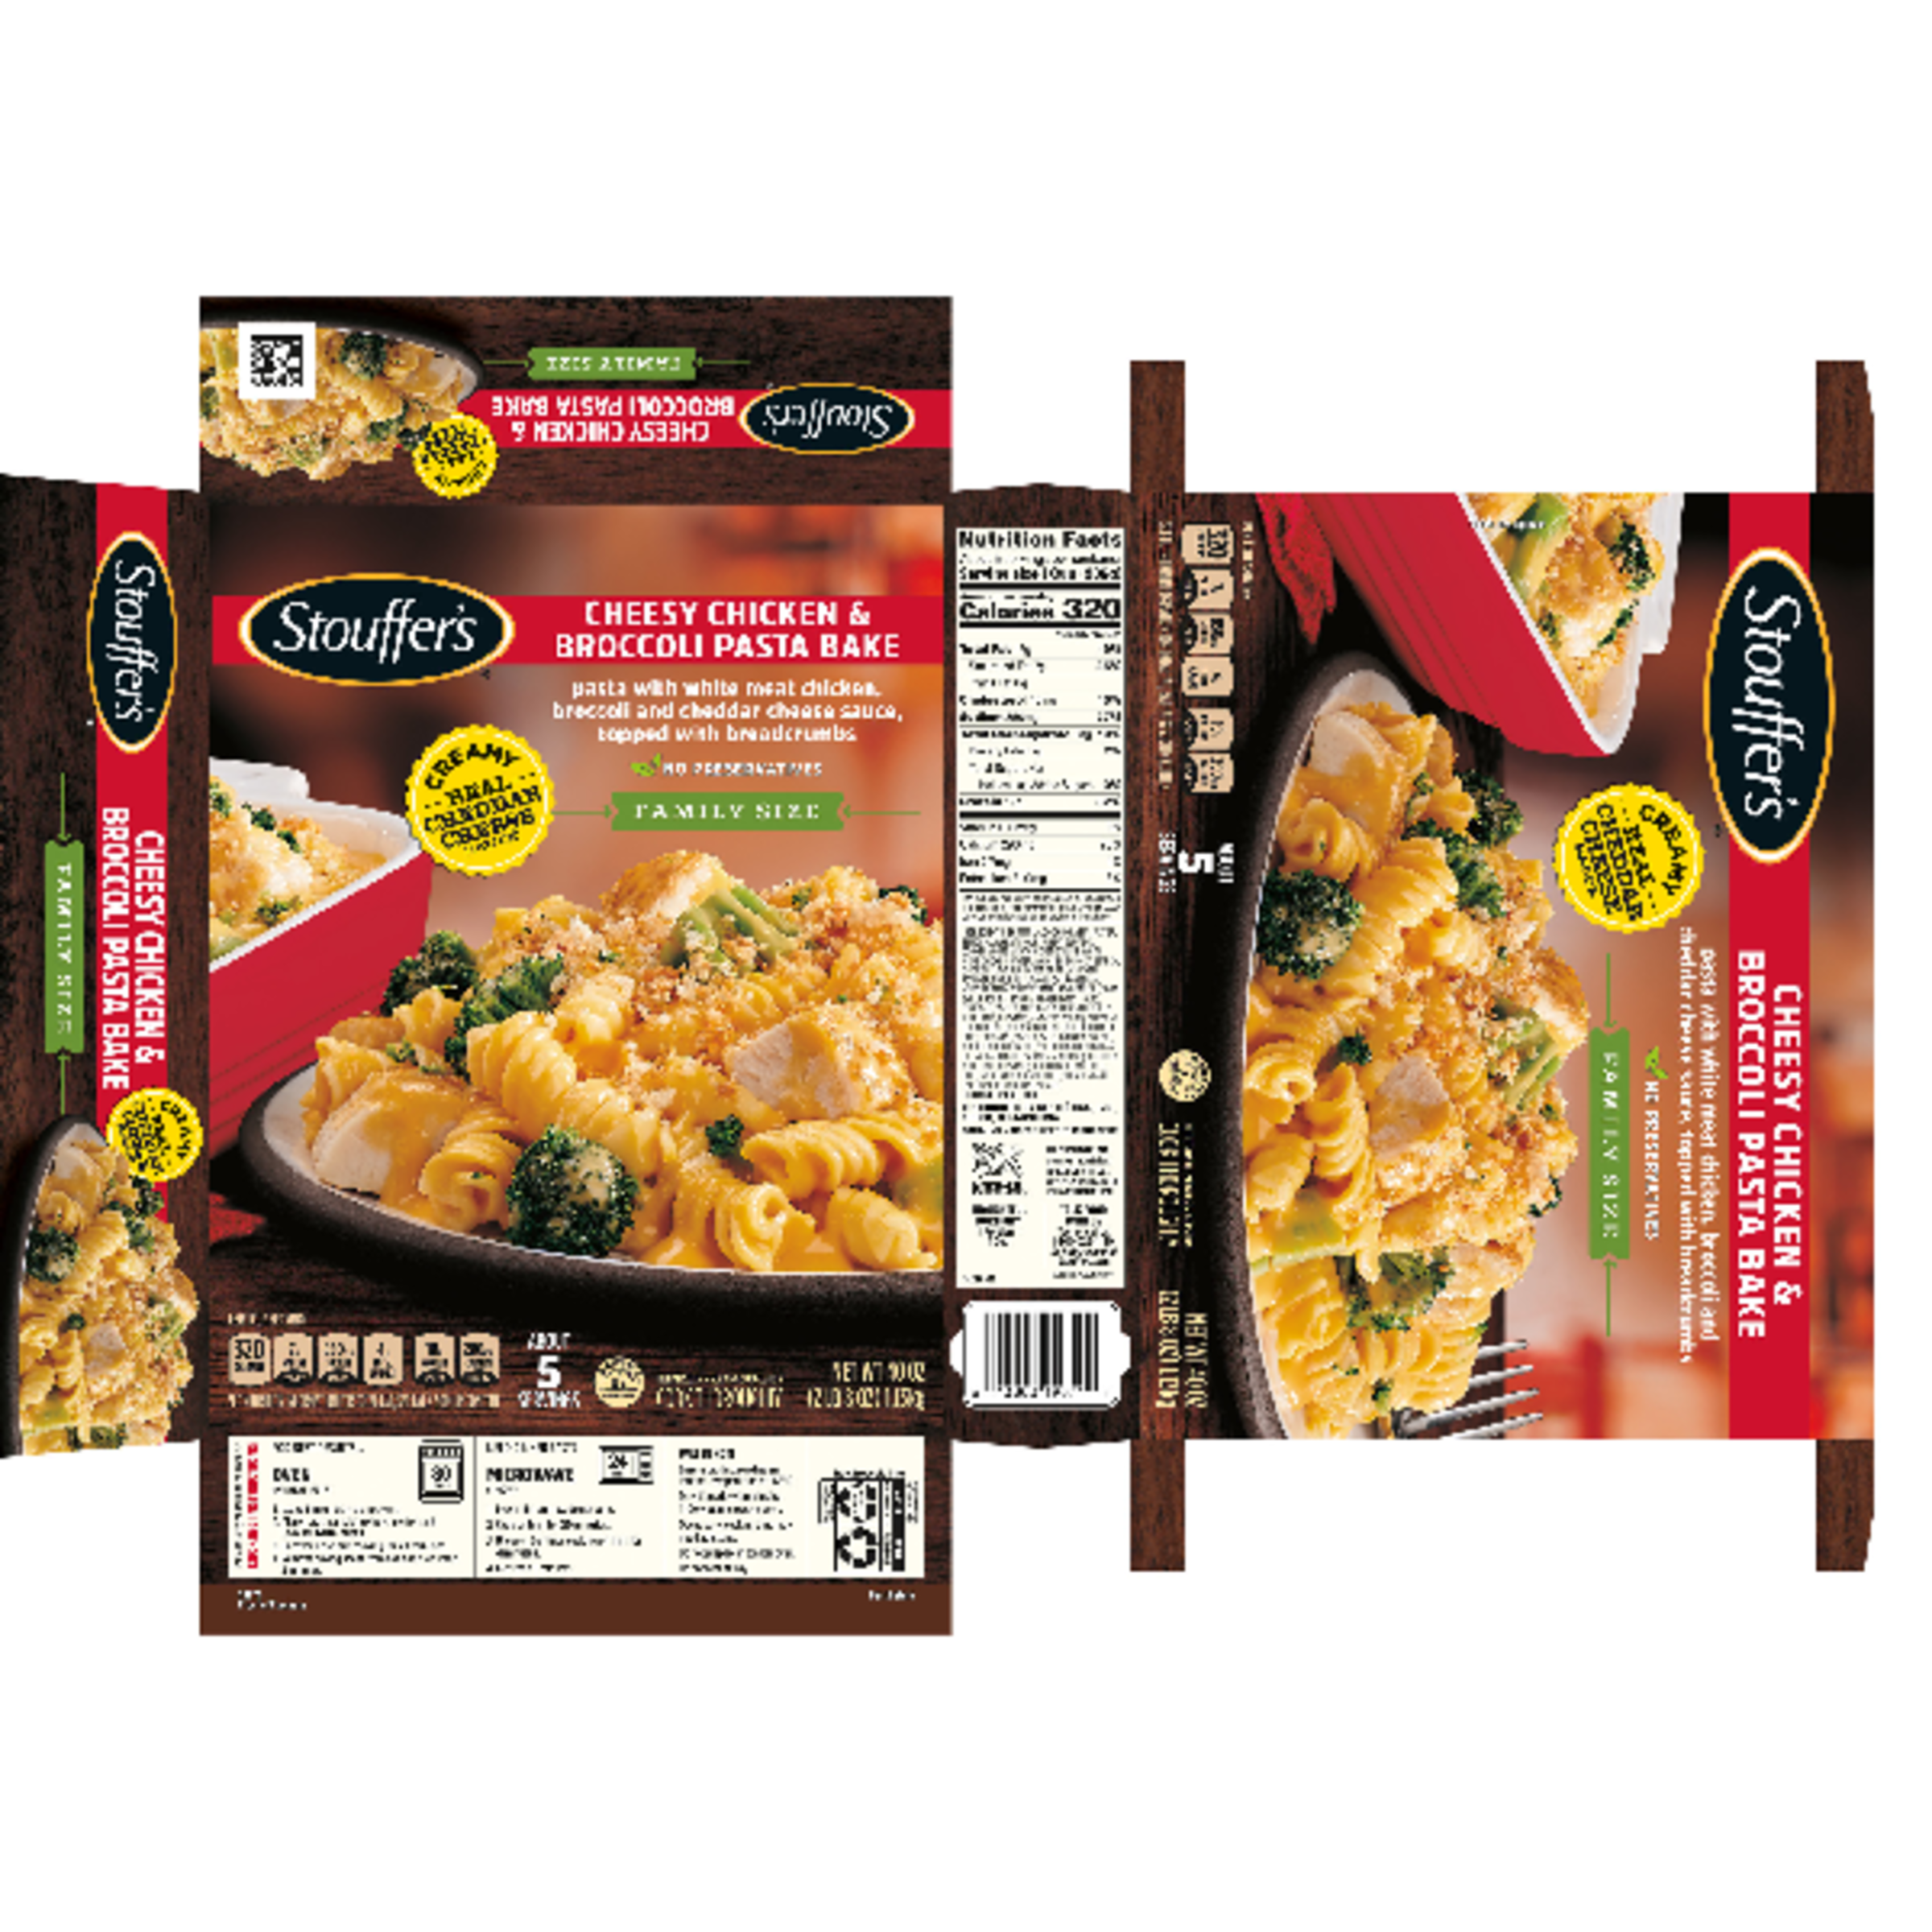 STOUFFER'S Cheesy Chicken & Broccoli Pasta Bake (Family Size) 6 units per case 40.0 oz Product Label